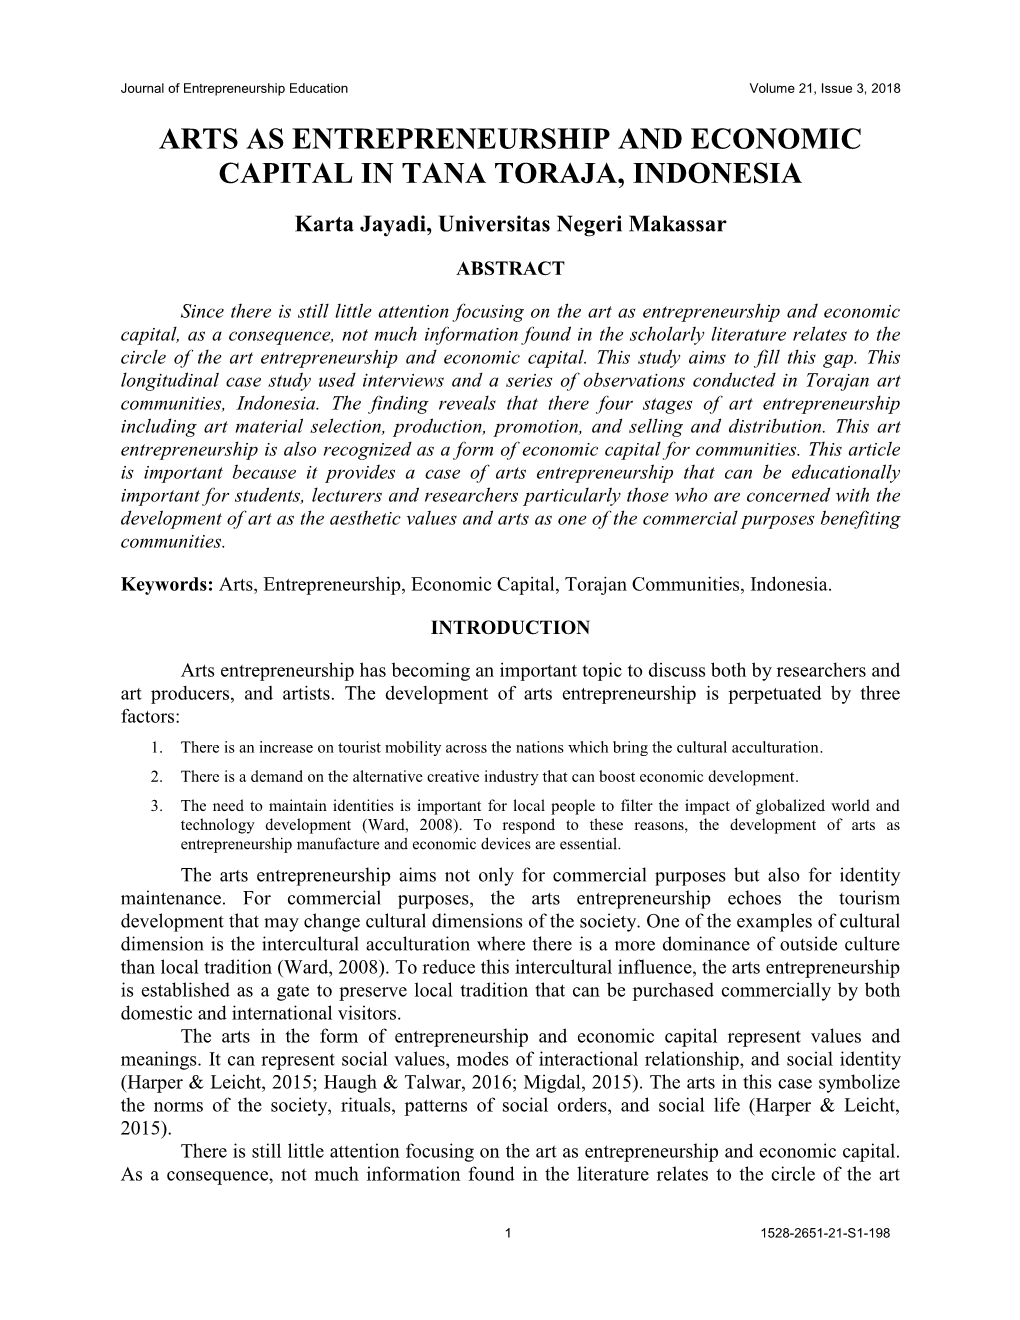 Arts As Entrepreneurship and Economic Capital in Tana Toraja, Indonesia